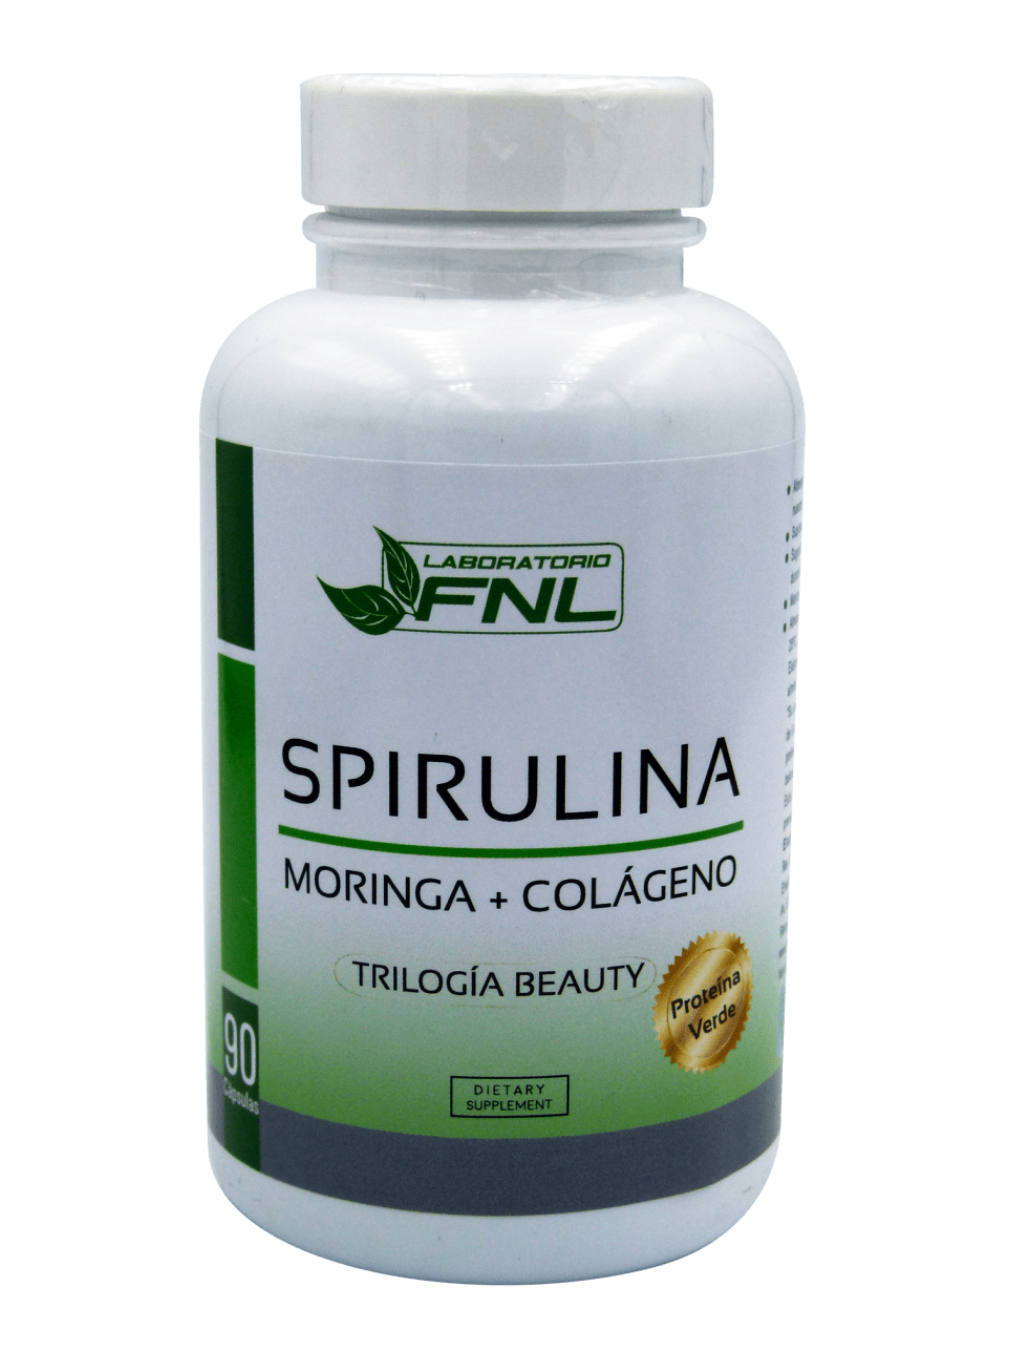 Laboratorio FNL - Spirulina 90 capsulas - Spirulina Moringa y Colageno